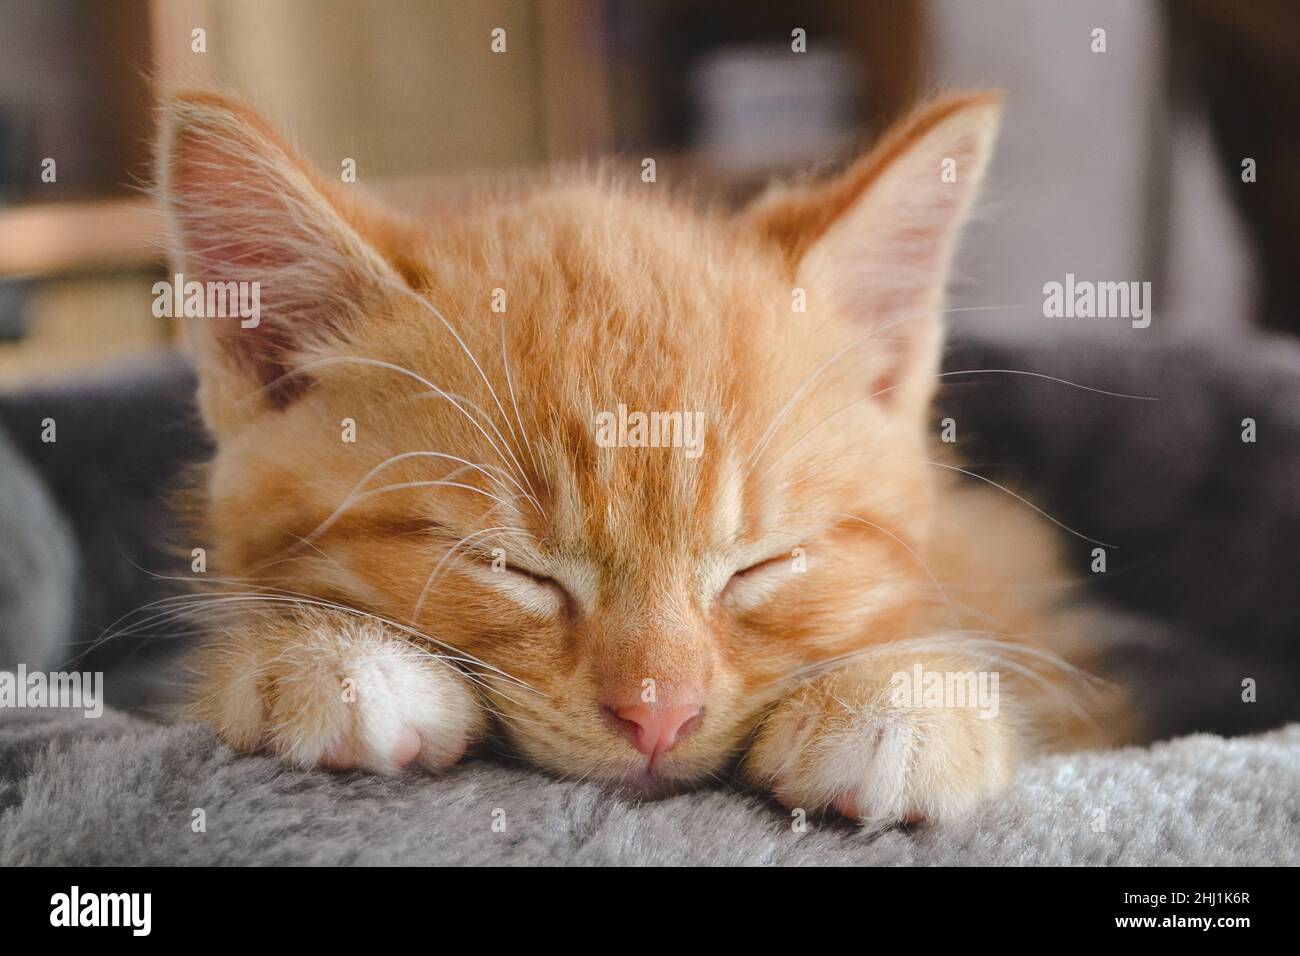 The little ginger kitten sleeps sweetly Stock Photo